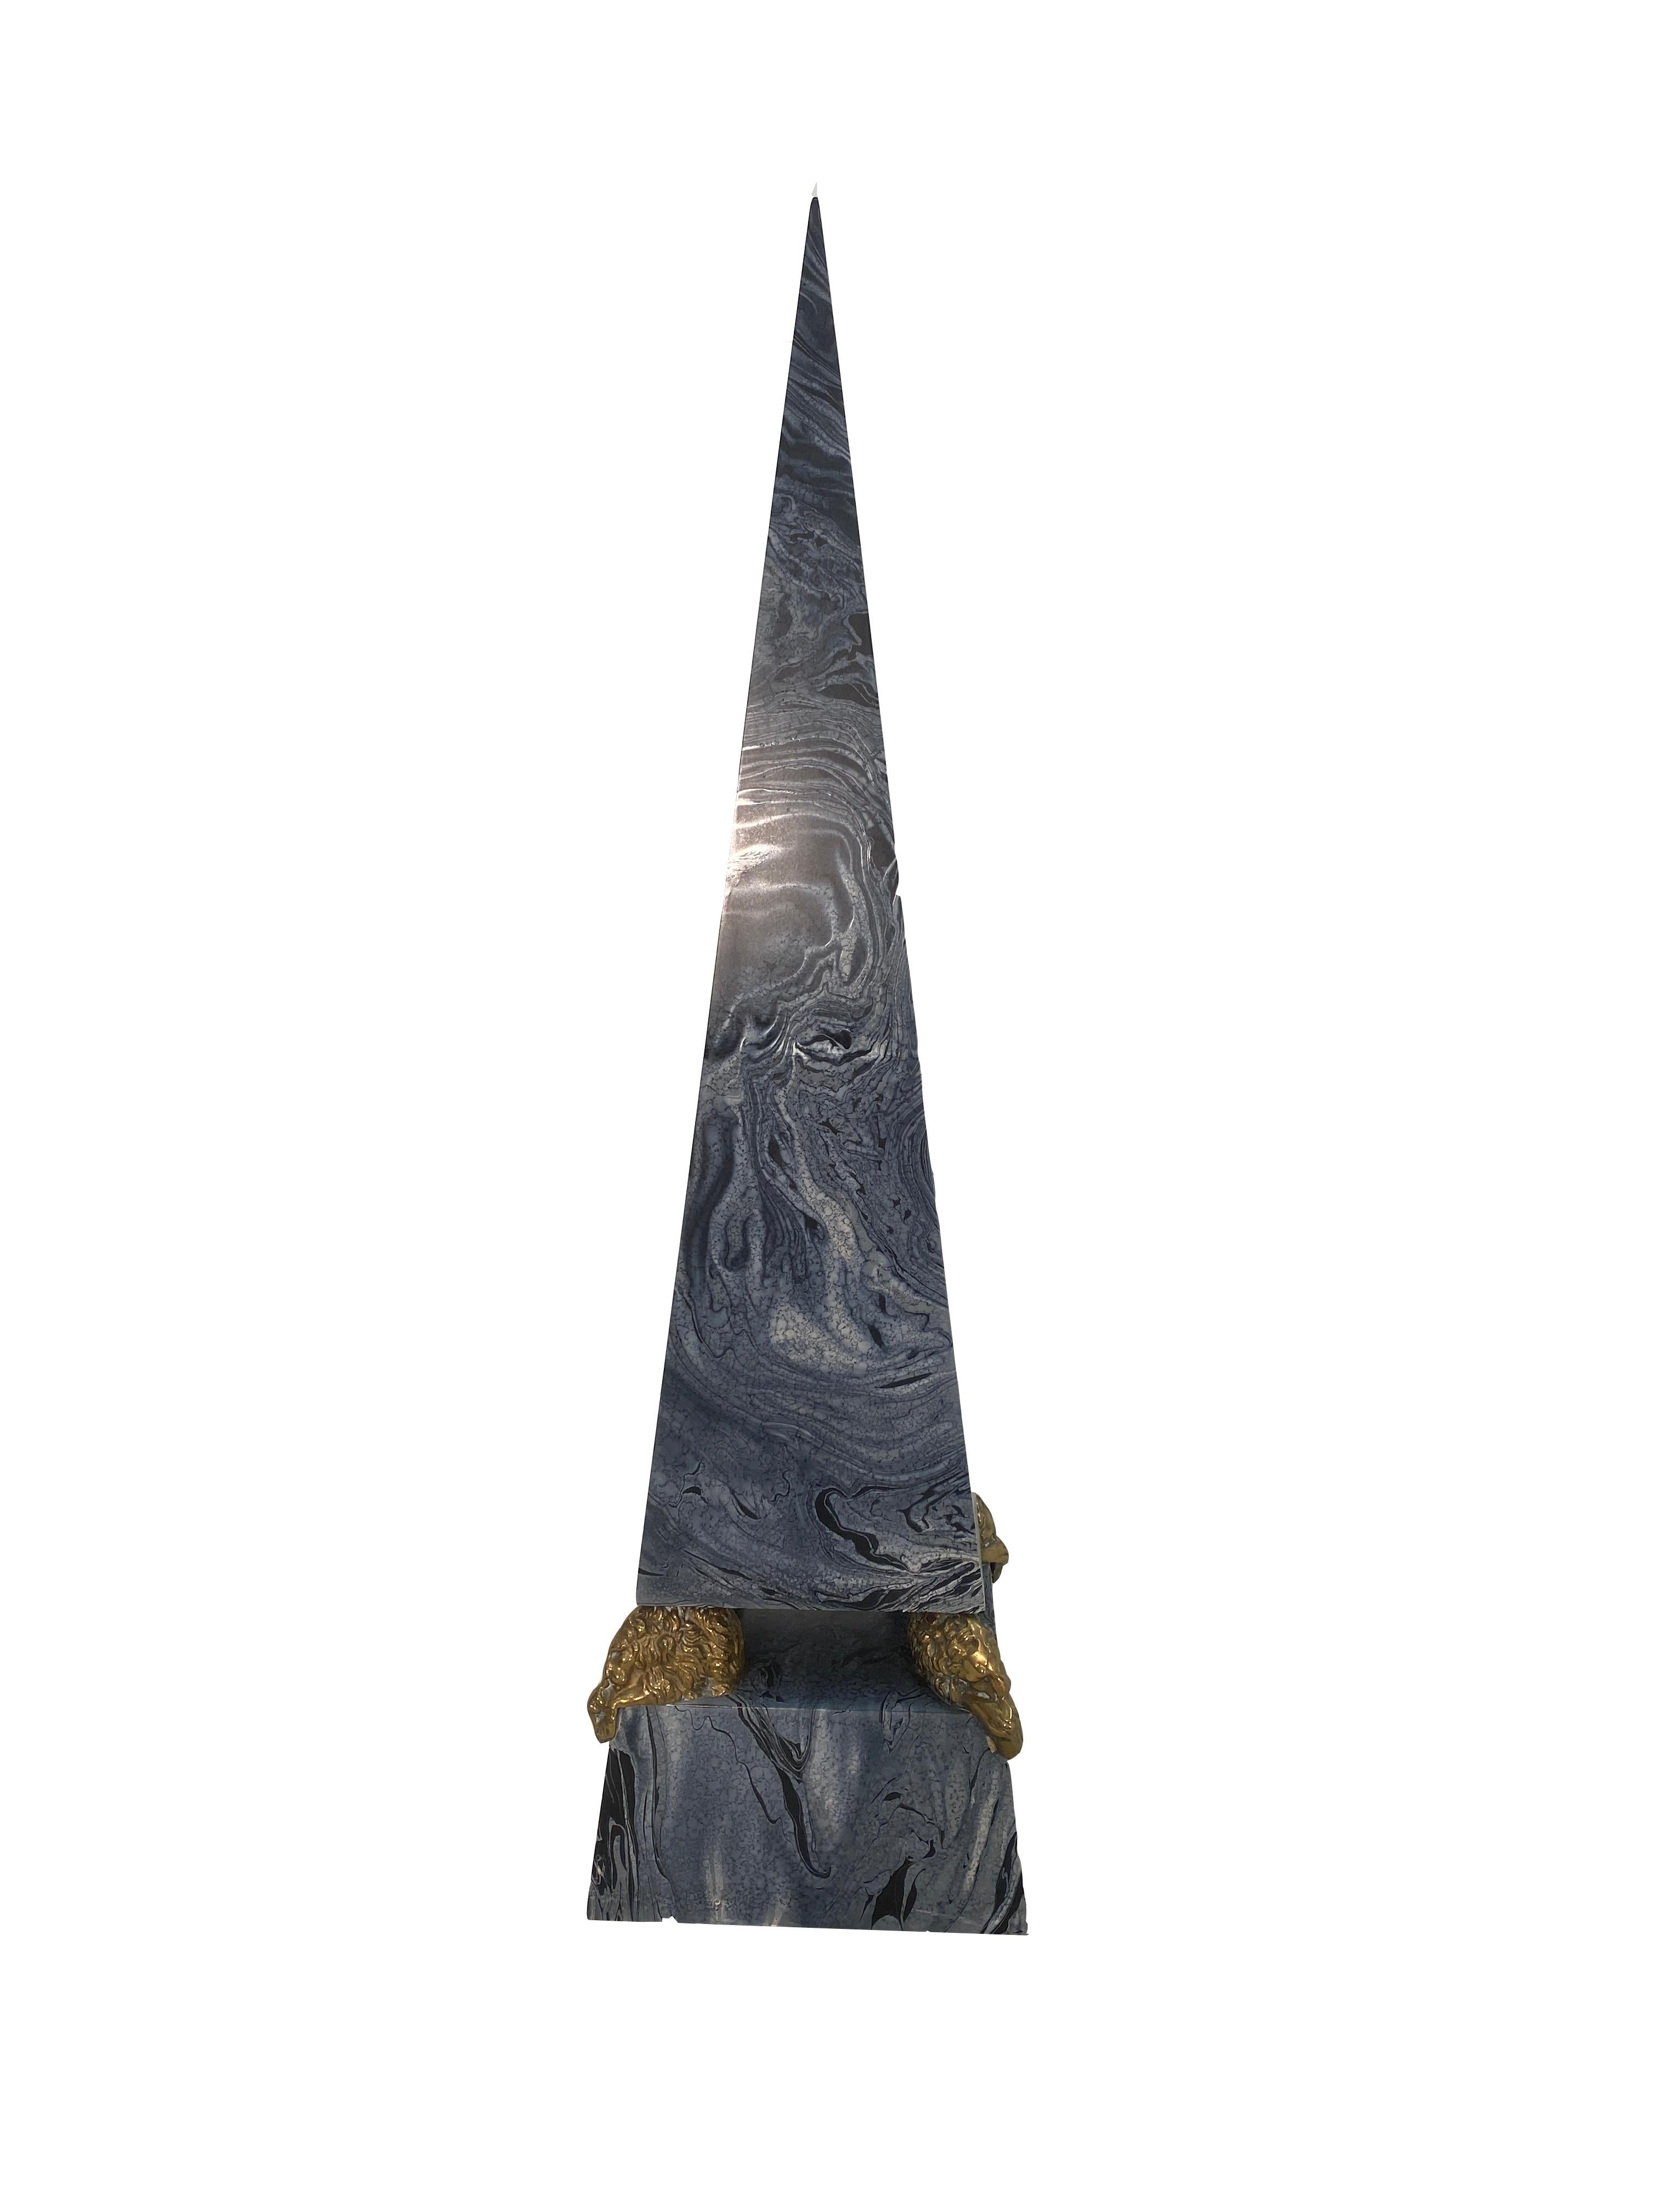 American Monumental Hollywood Regency Style Faux Marble Obelisk